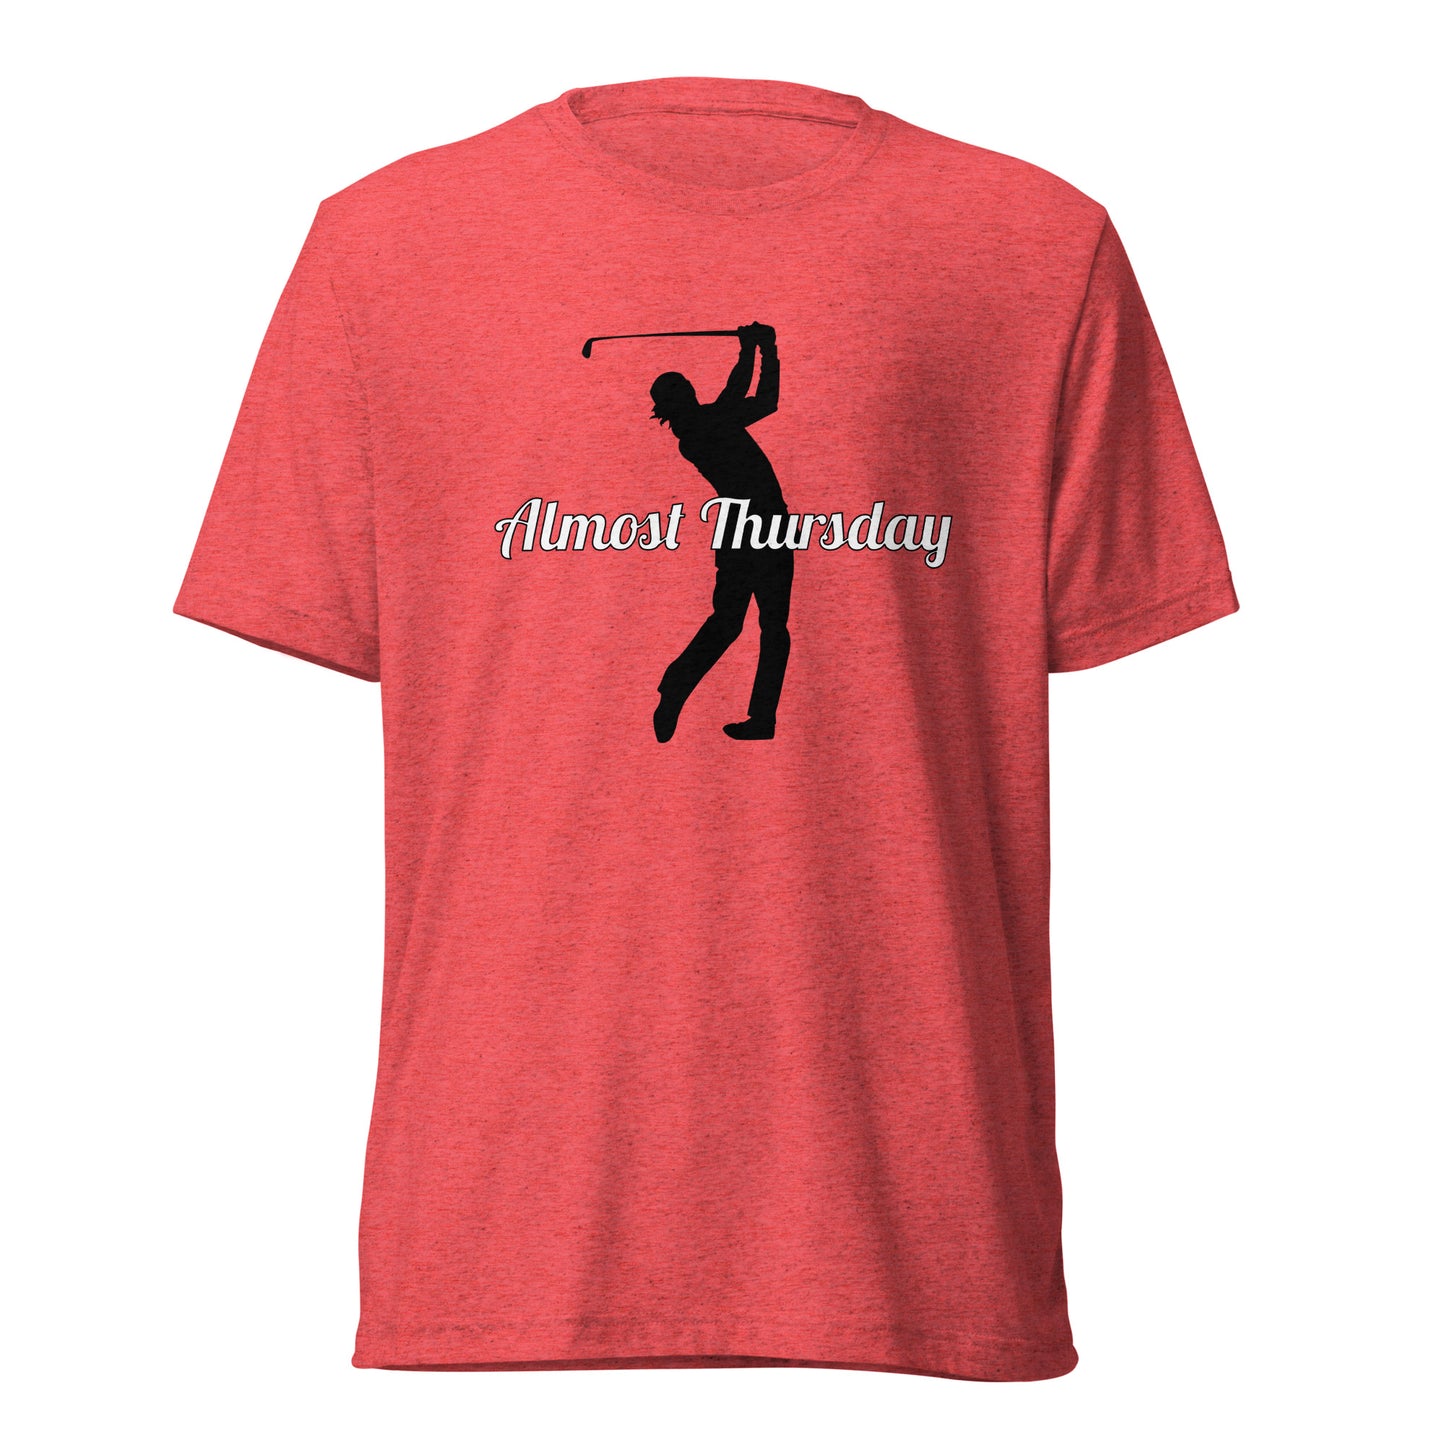 Almost Thursday - Golf Gambling Podcast Short sleeve t-shirt